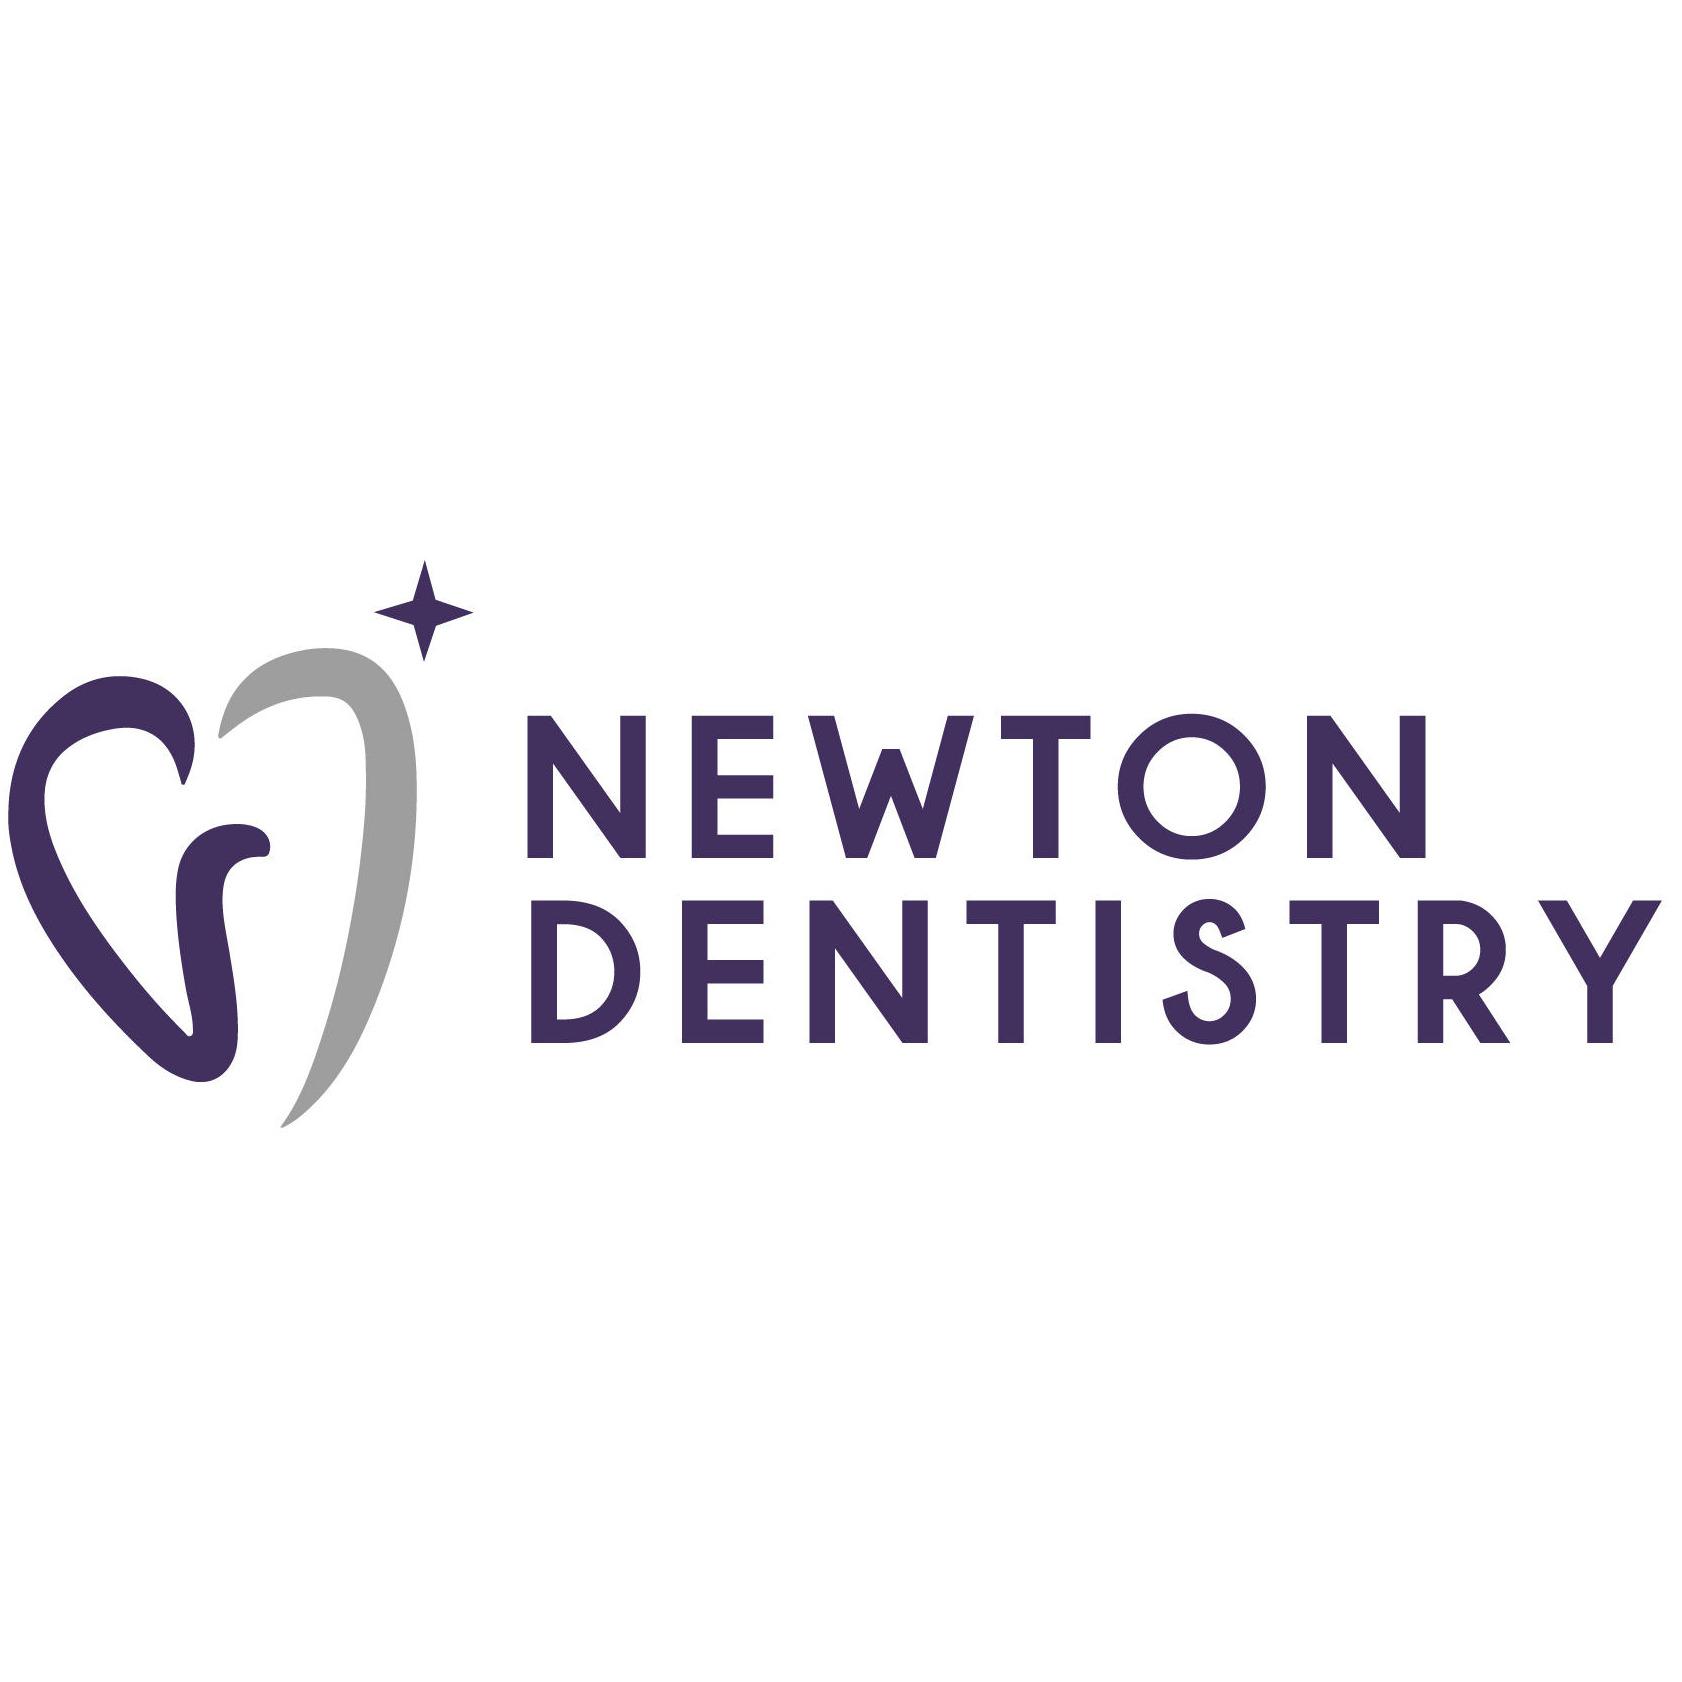 Newton Dentistry - Newton, MA 02466 - (617)244-5020 | ShowMeLocal.com